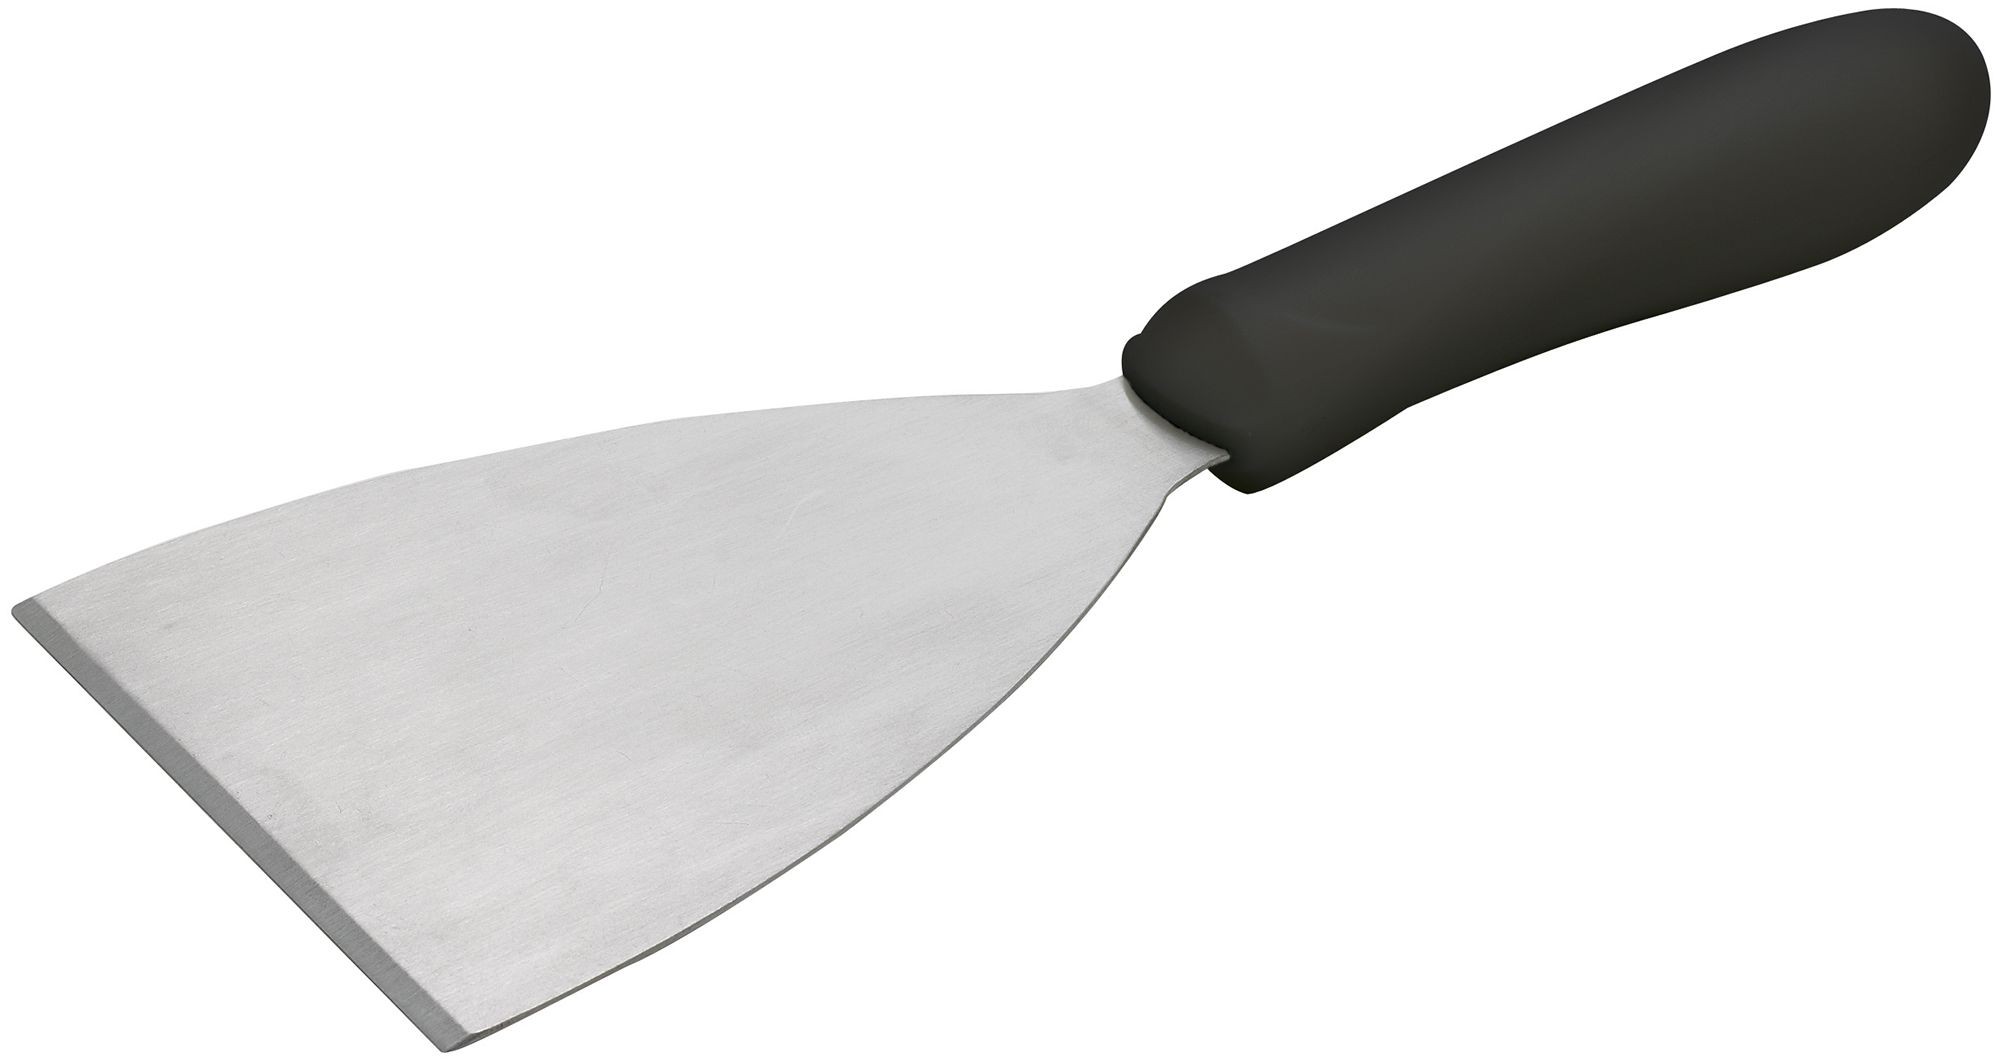 Winco TKP-40 Griddle Grill Scraper, 4-7/8" x 4" Blade, Black Polypropylene Handle